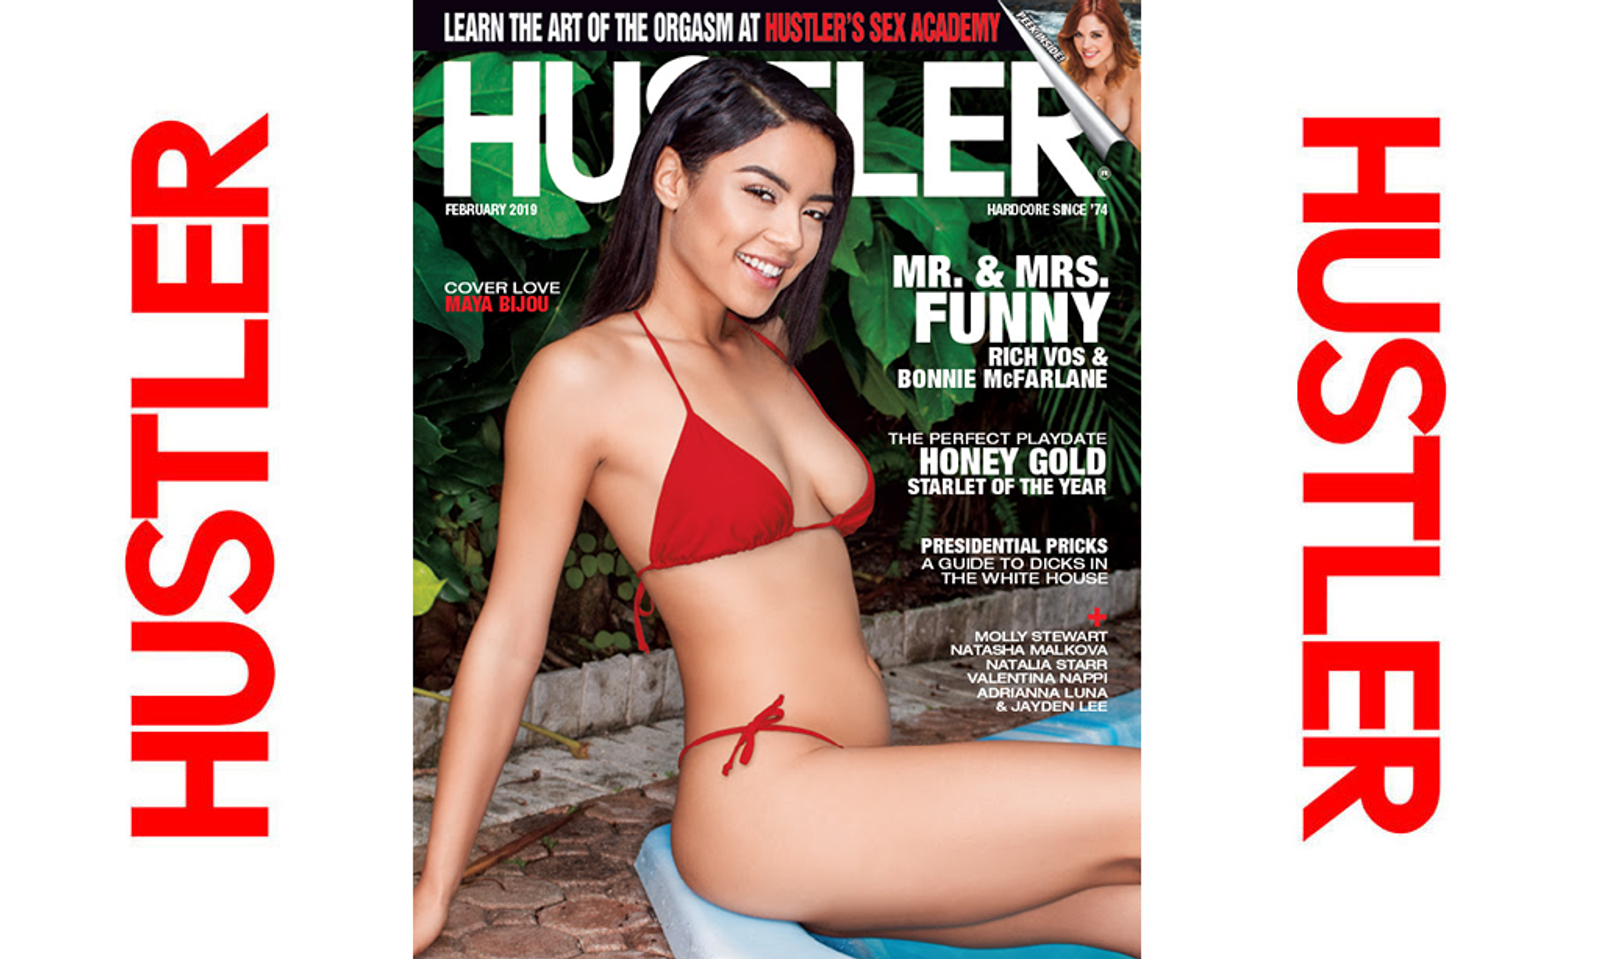 Honey Maya Bijou Gets The Cover of February 2019 Hustler